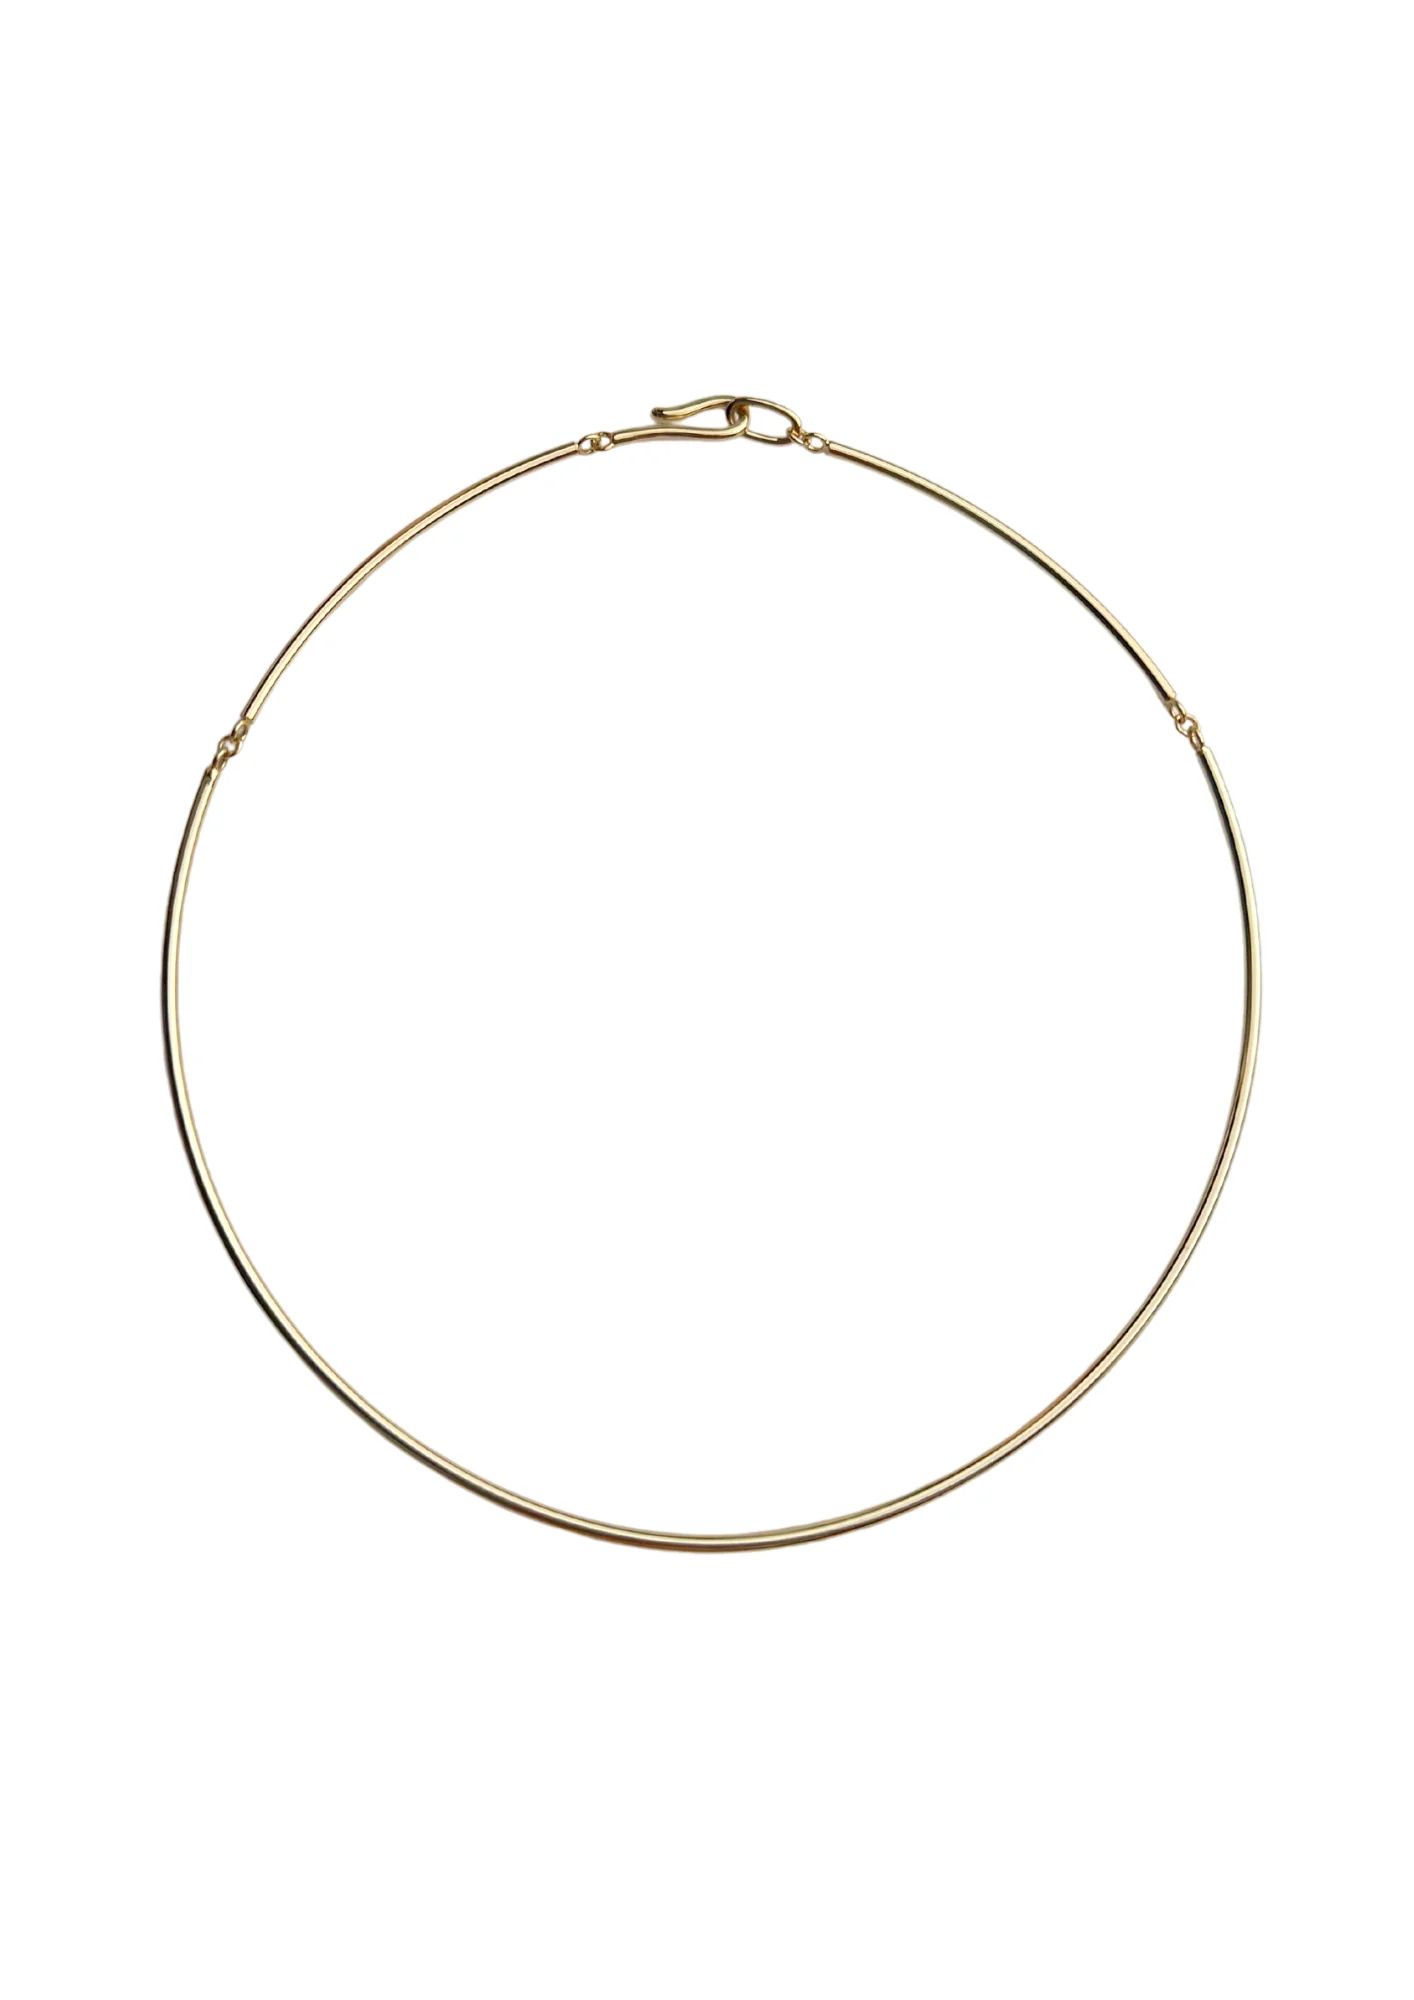 Golden Collar Necklace | Nicola Bathie Jewelry